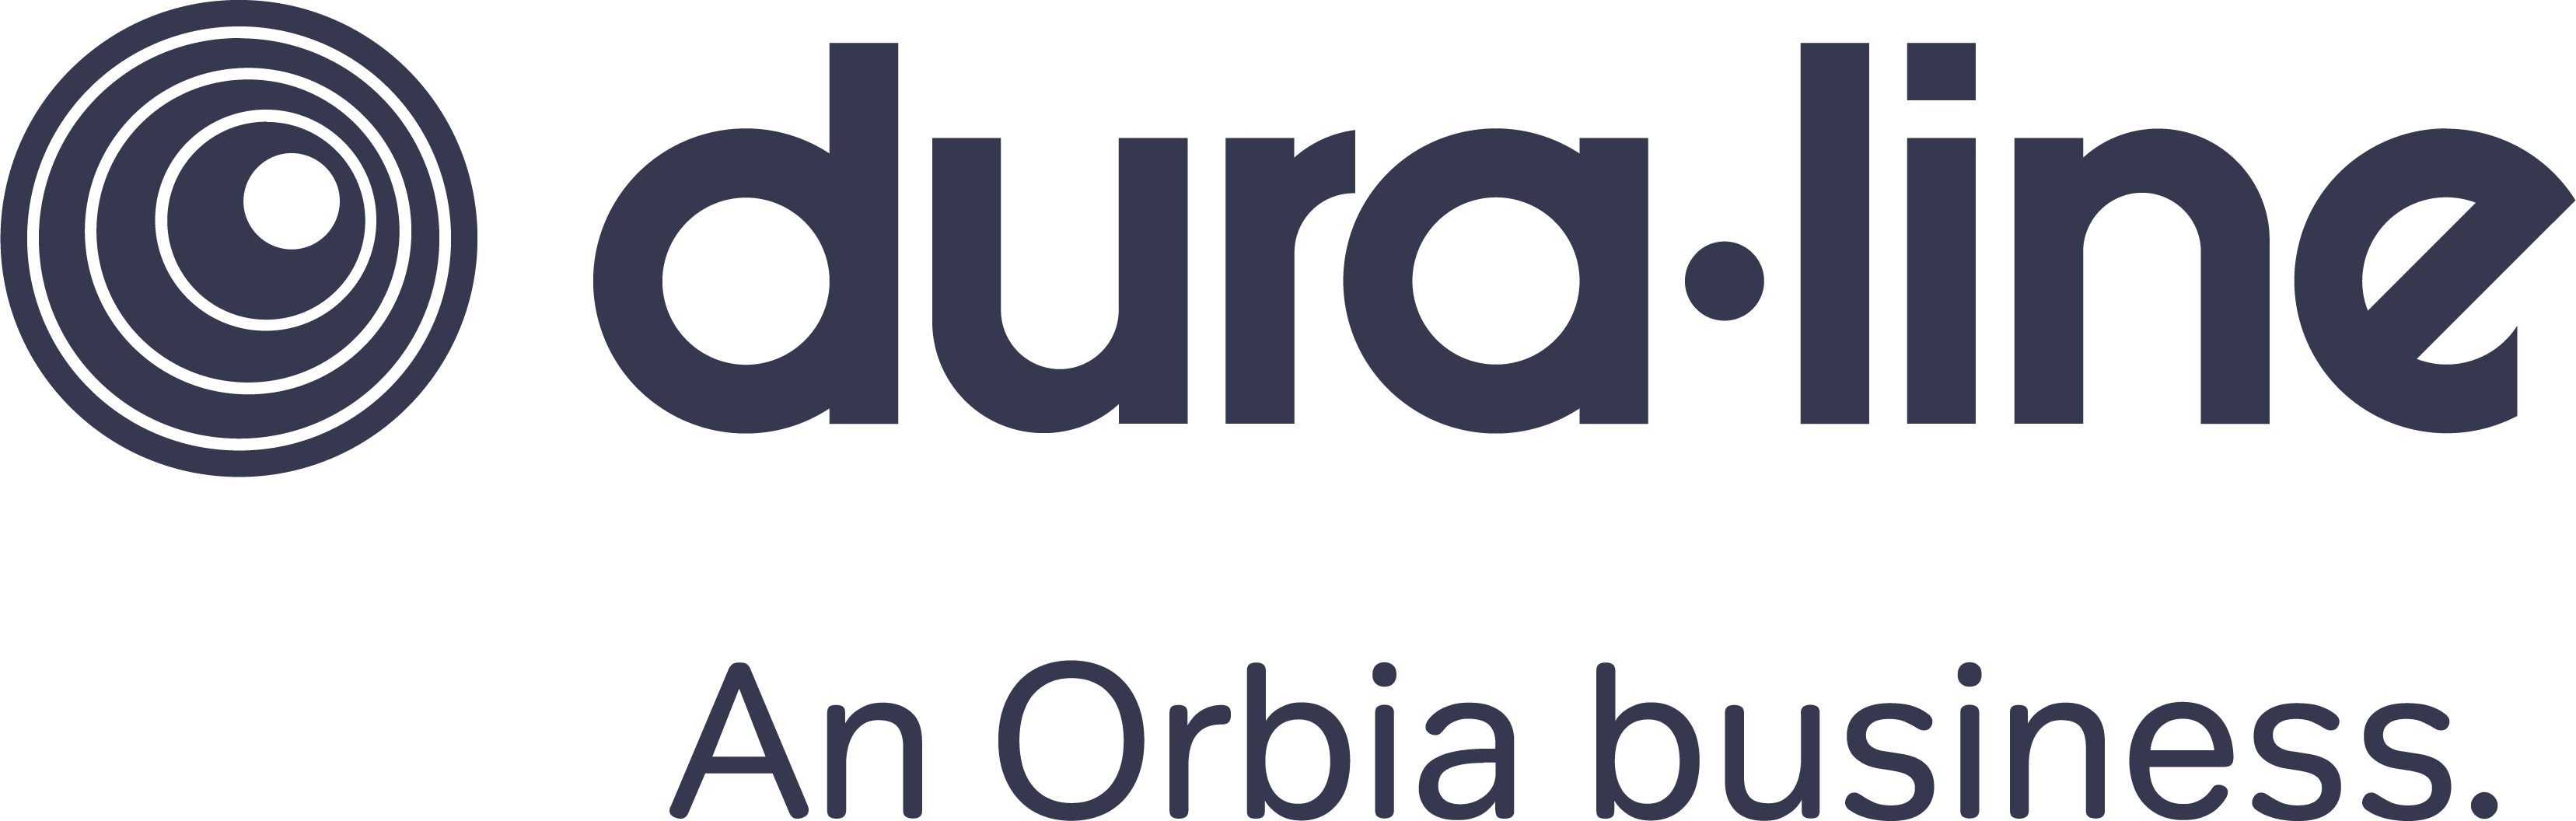 Dura-Line Germany GmbH